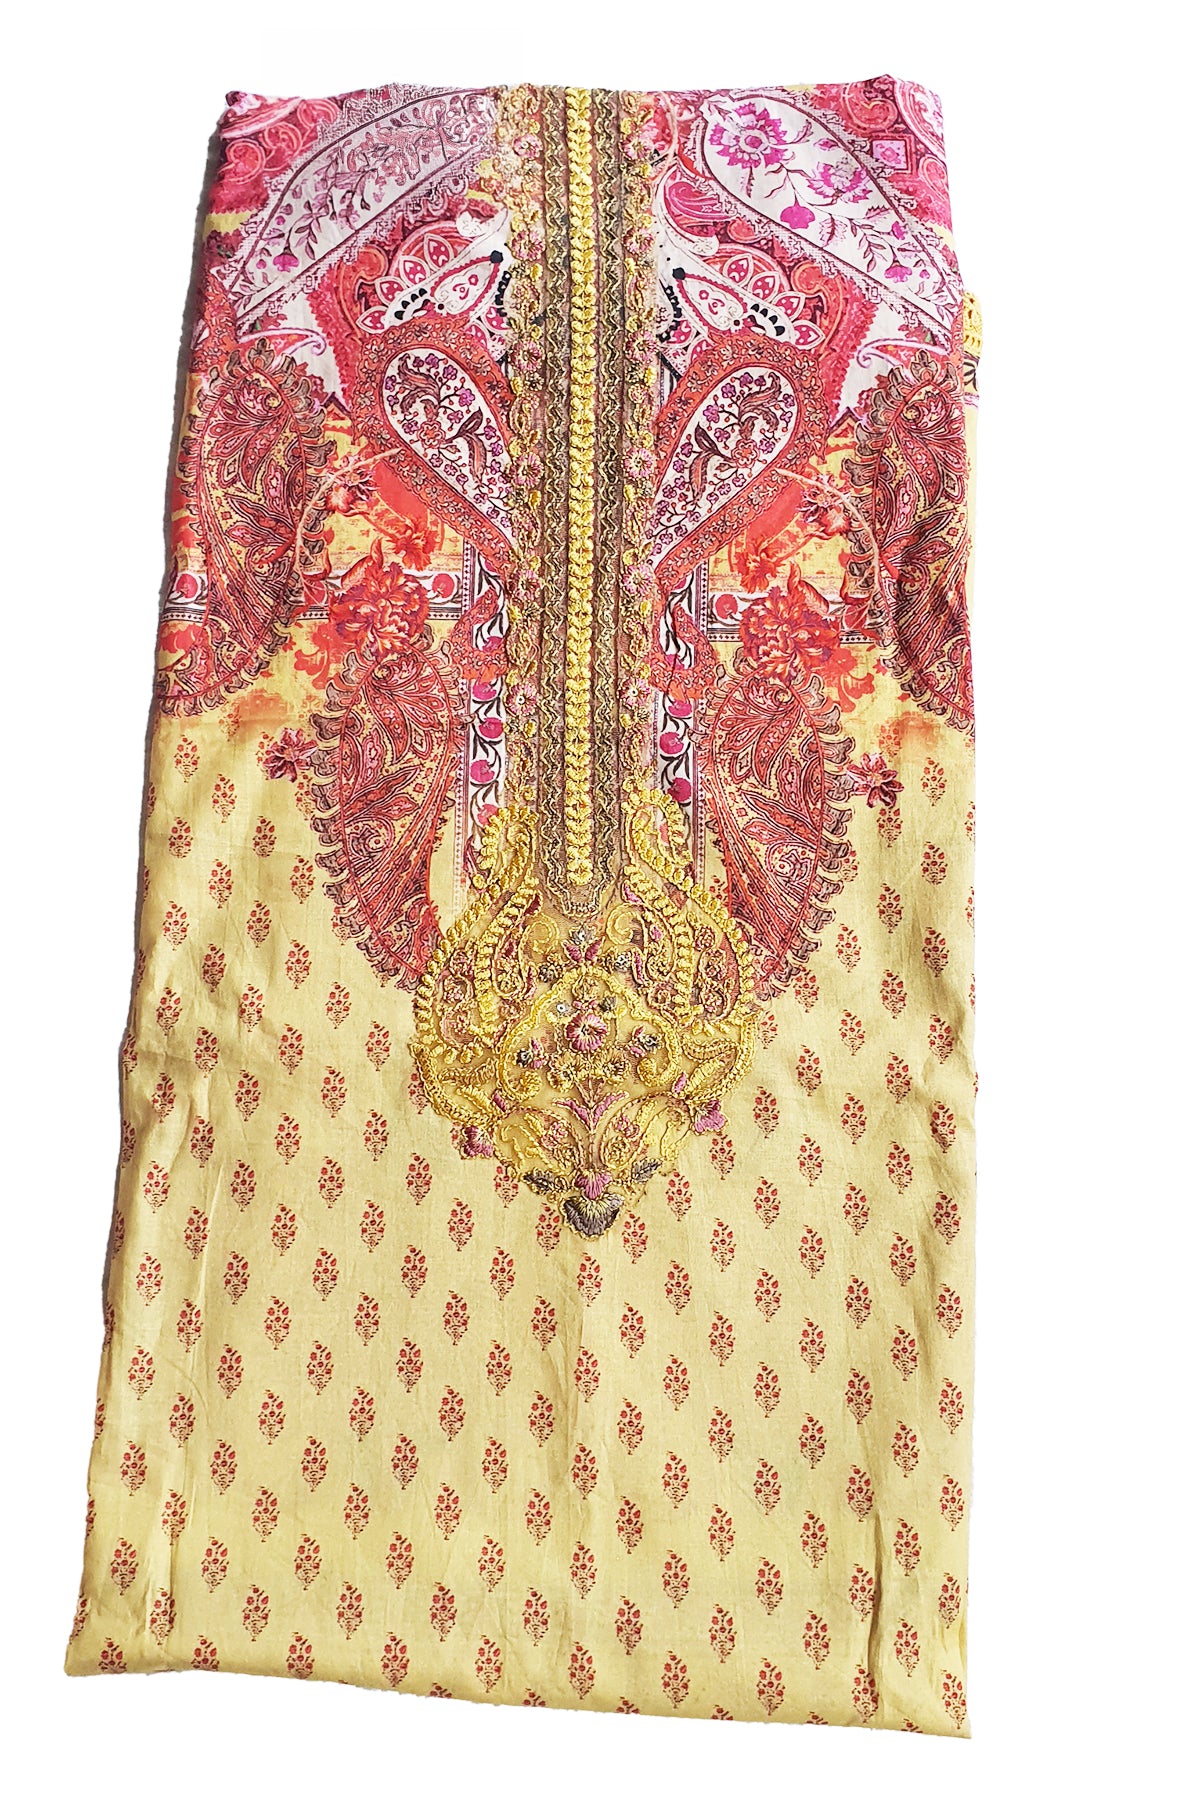 Mustard Printed Cotton Resham Embroidered Unstitched Suit